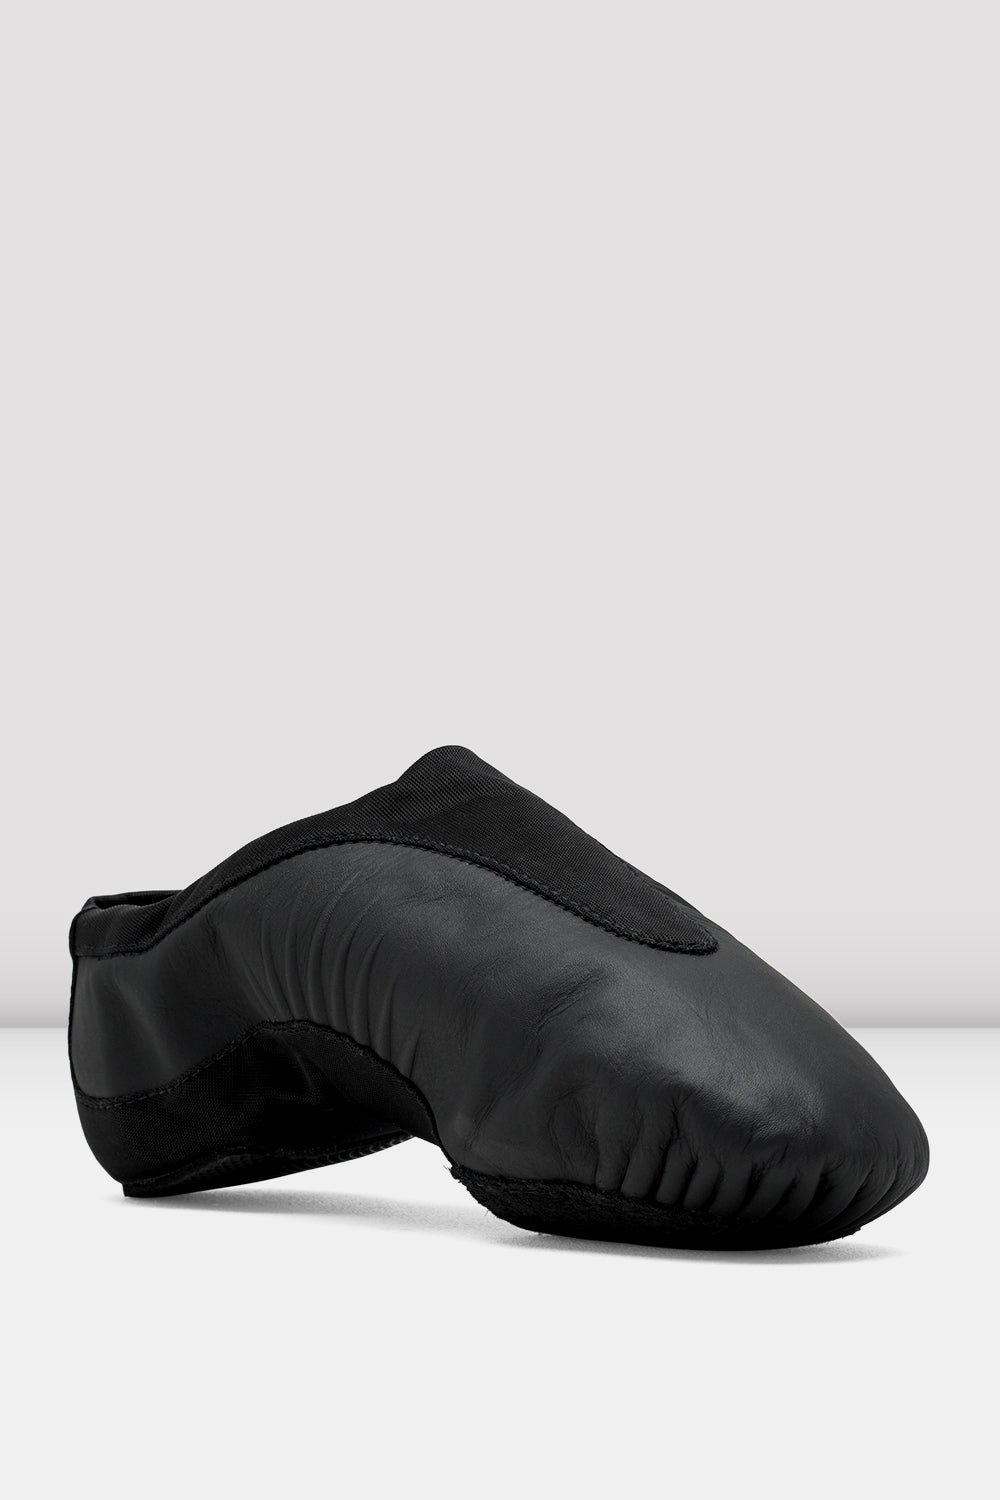 Adult Pulse Jazz Shoes by Bloch — Boulder Body Wear